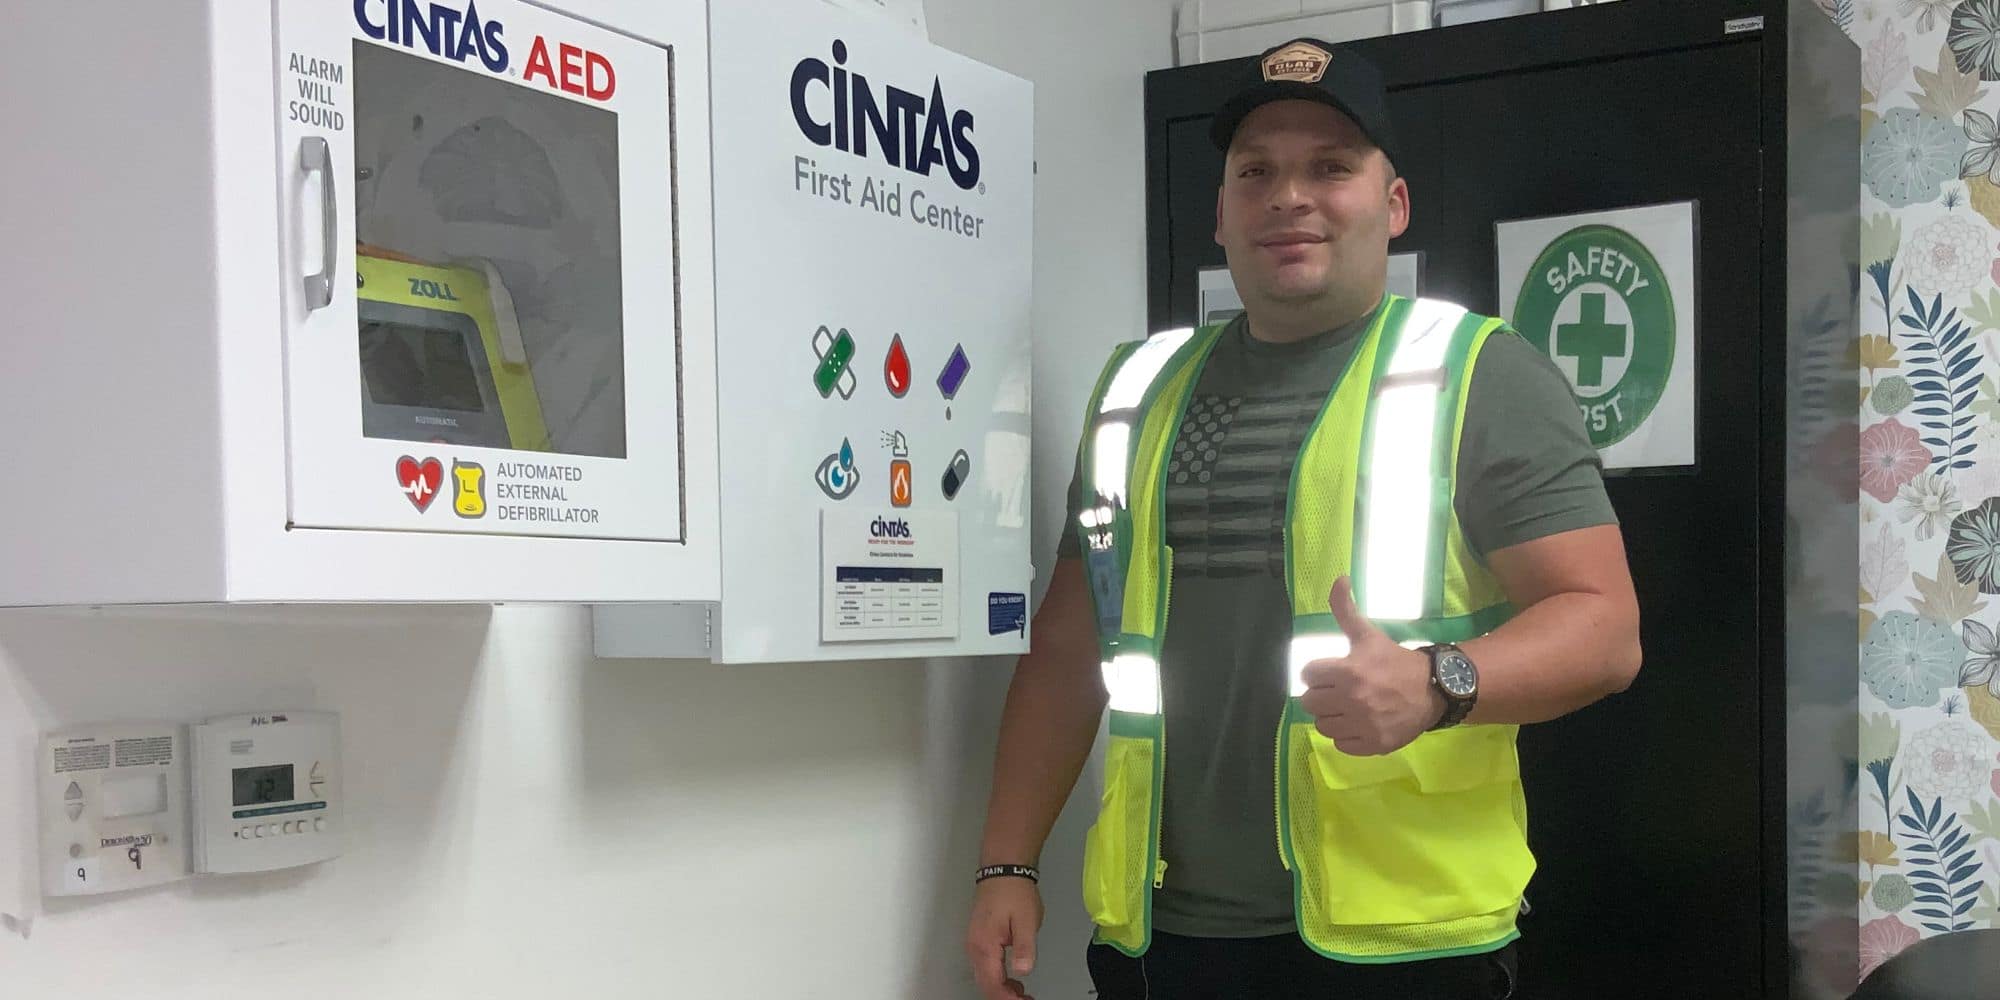 B.S. in Safety Management student Luis Artigas